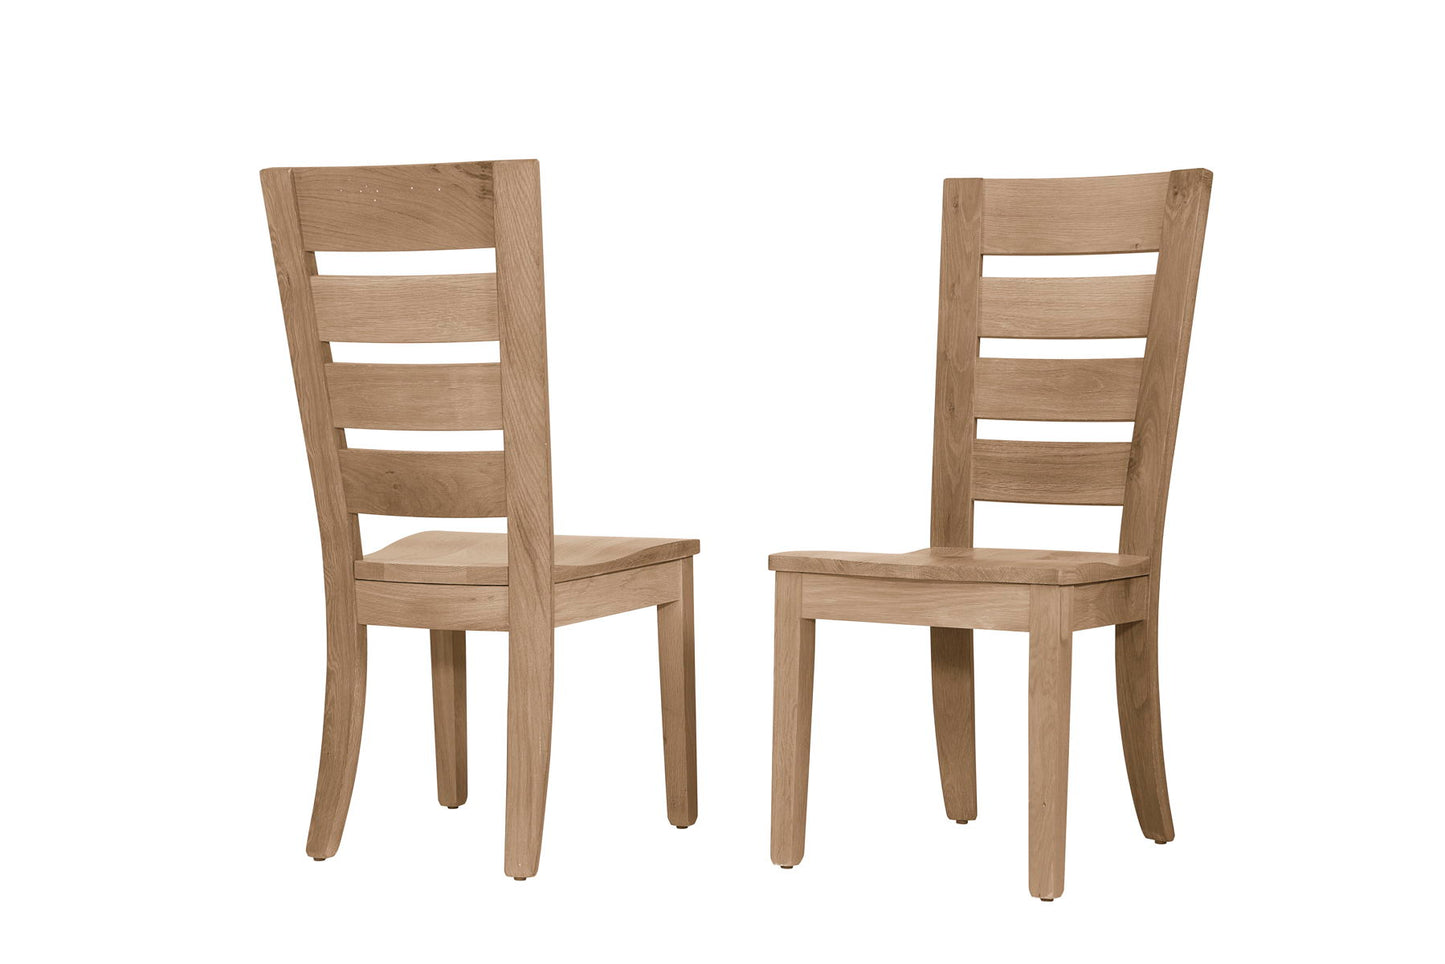 Dovetail - Horizontal Slat Dining Chair